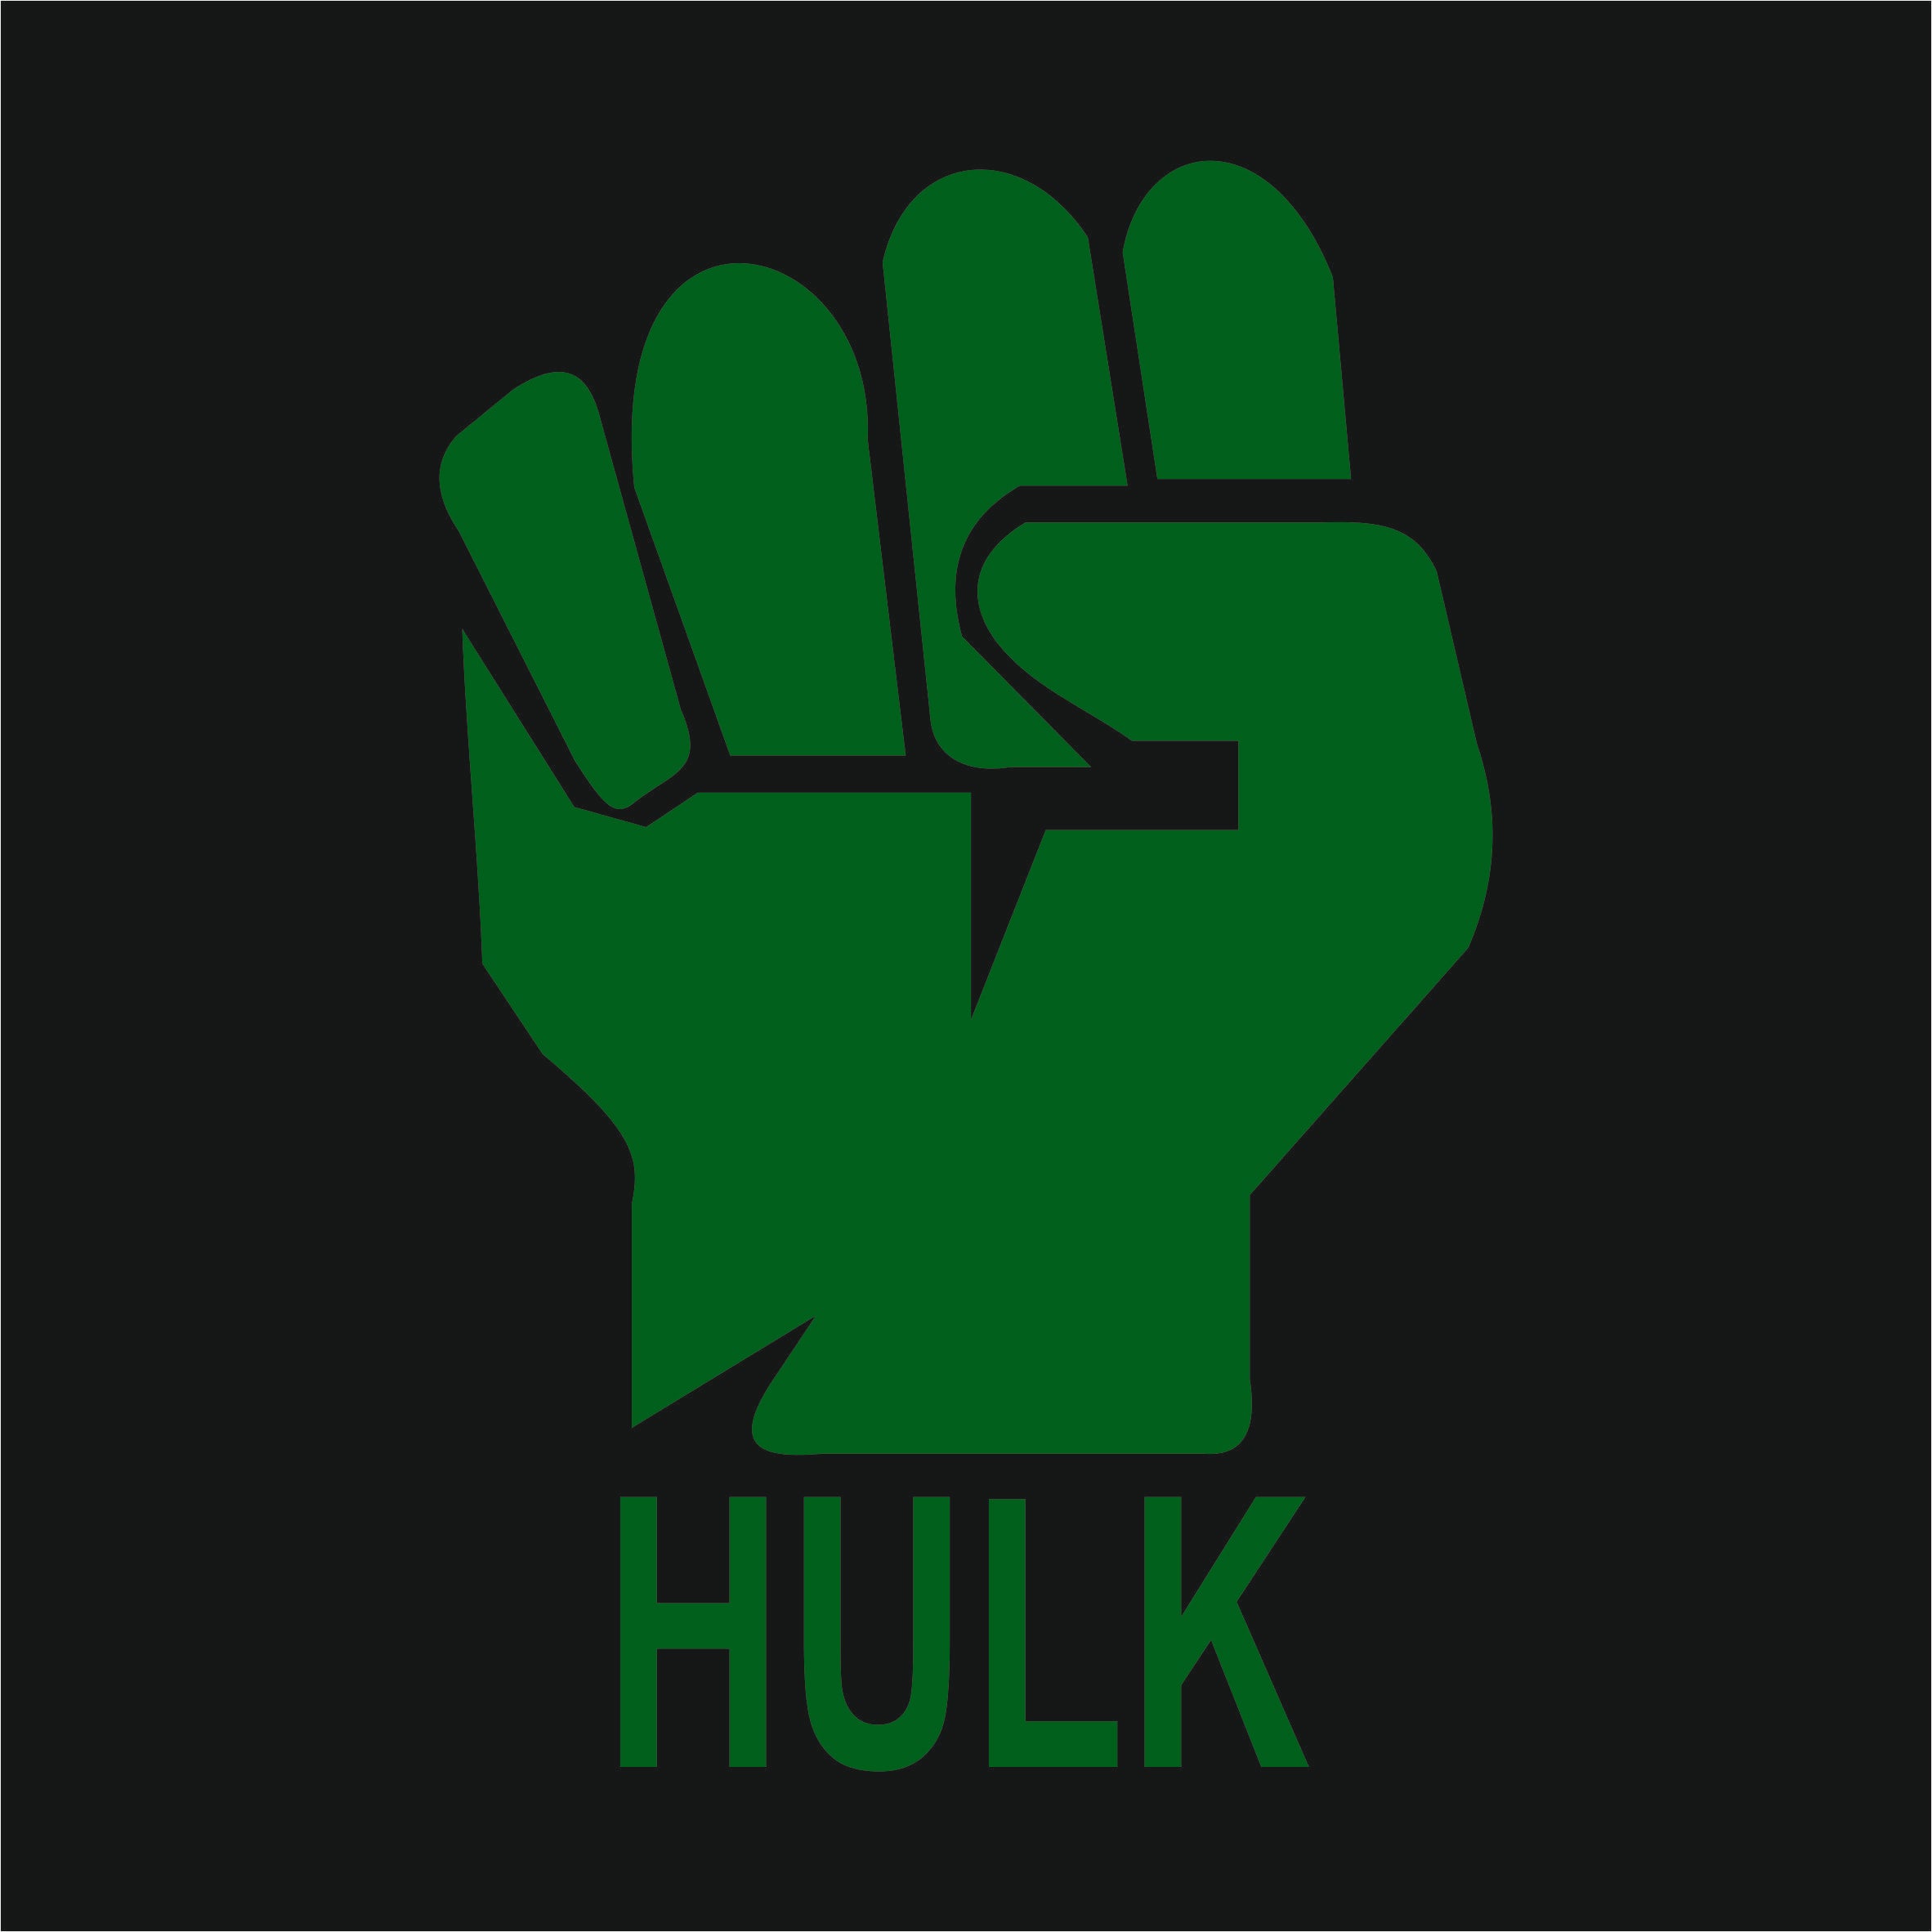 The Hulk Reactr Tshirts For Men - Eyewearlabs